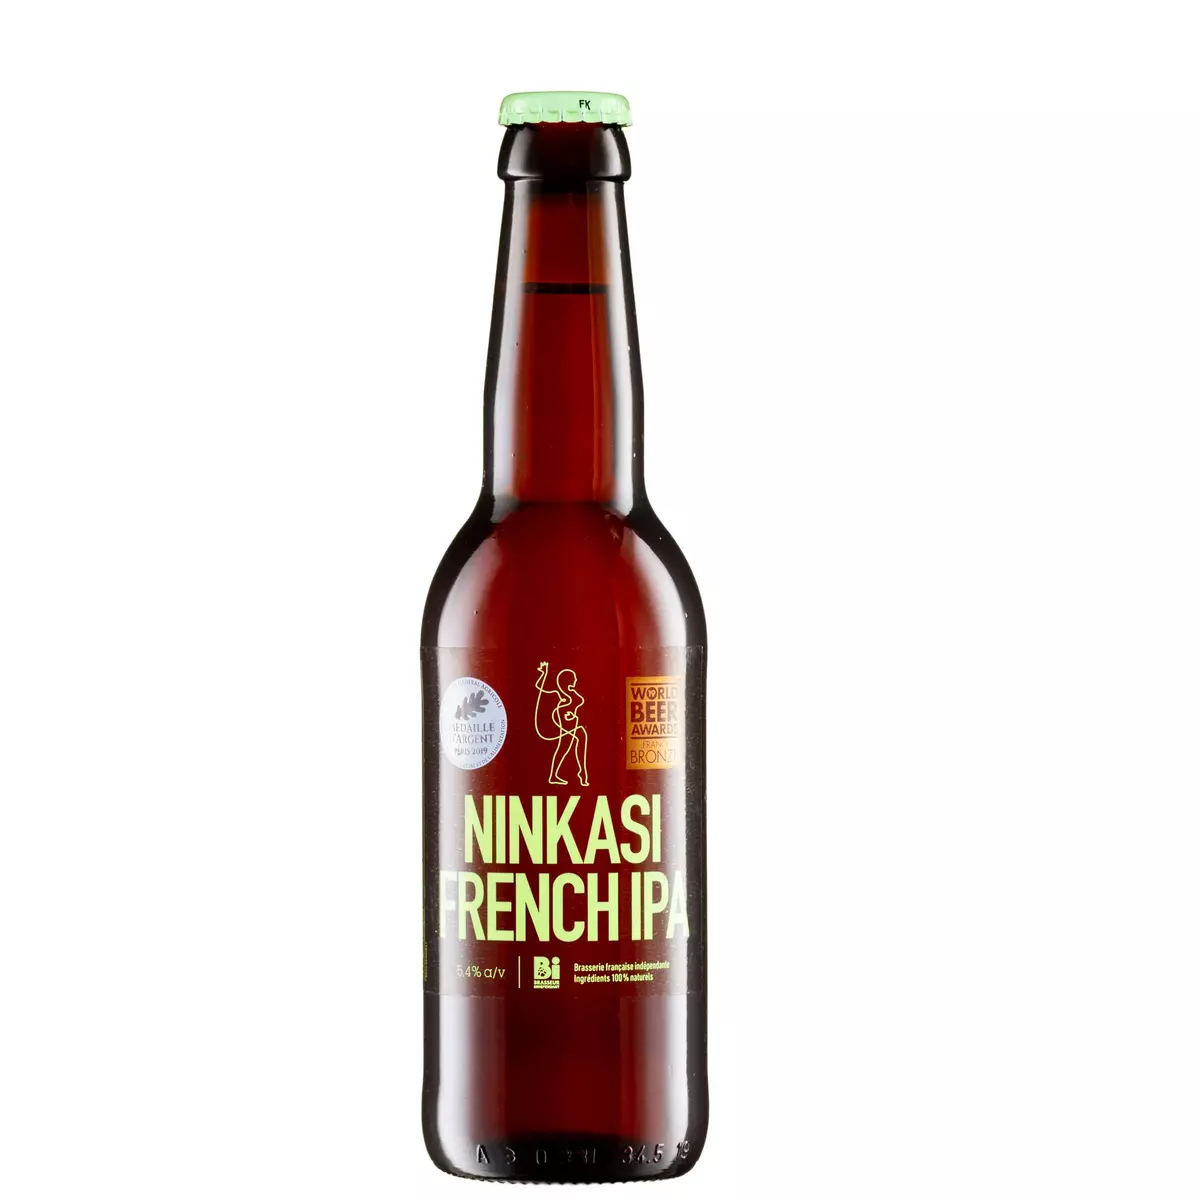 NINKASI Bière French IPA 5.4% bouteille 33cl